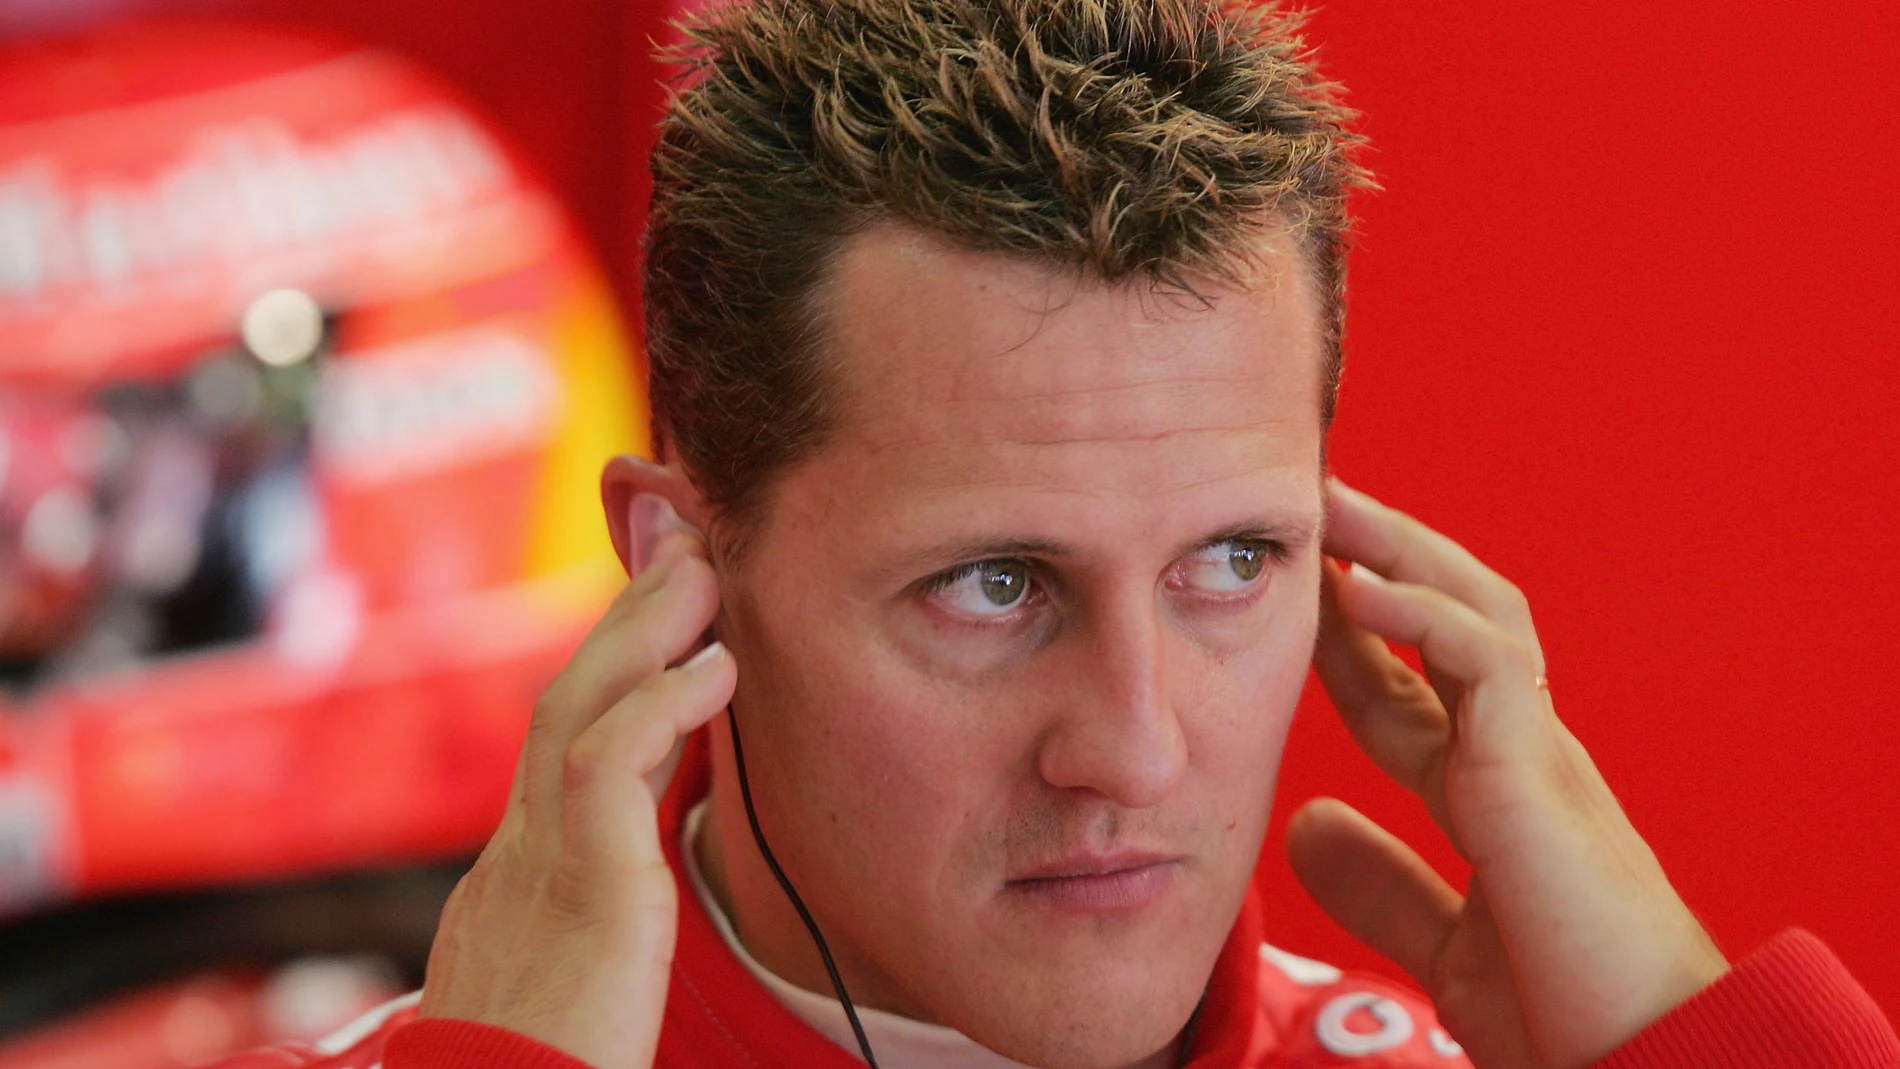 Schumacher, en el GP de China 2004